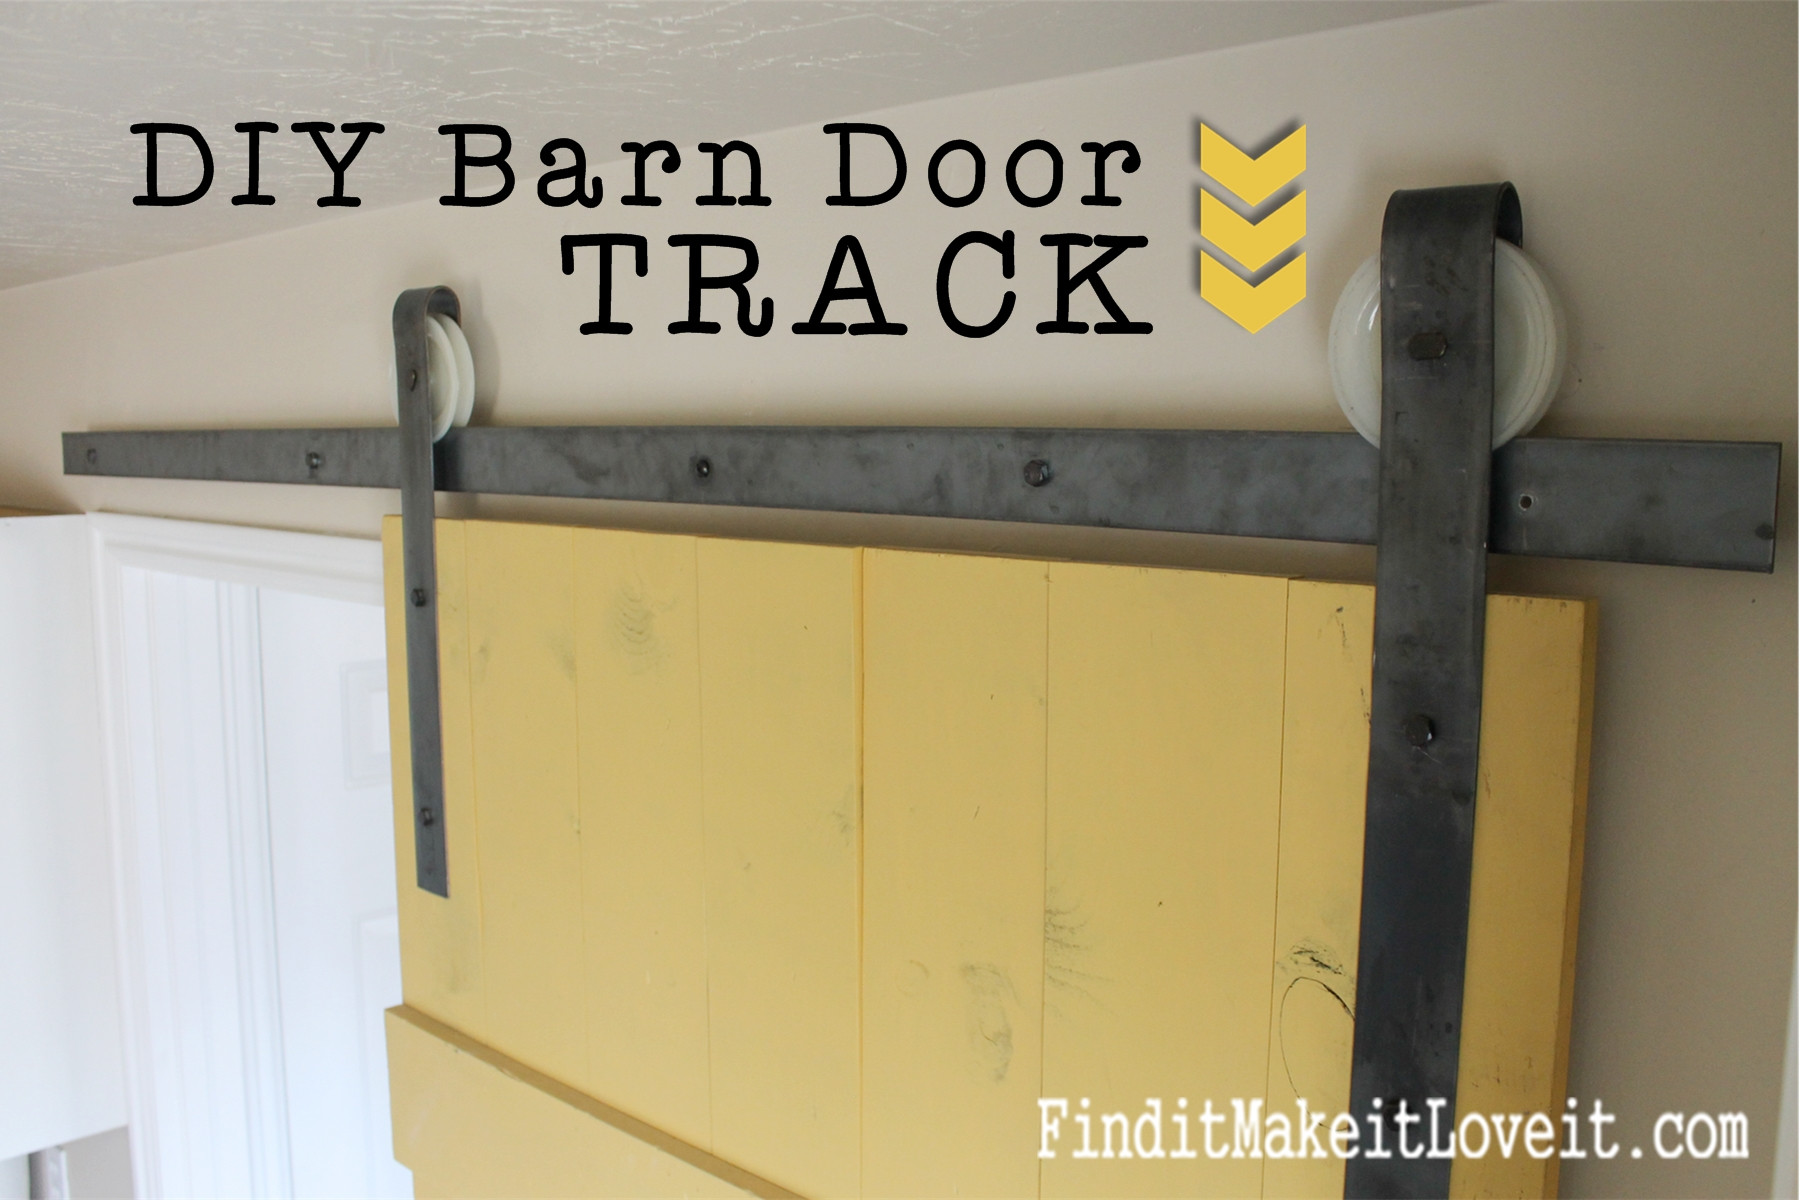 DIY Sliding Barn Door Track
 DIY Barn Door Track Find it Make it Love it